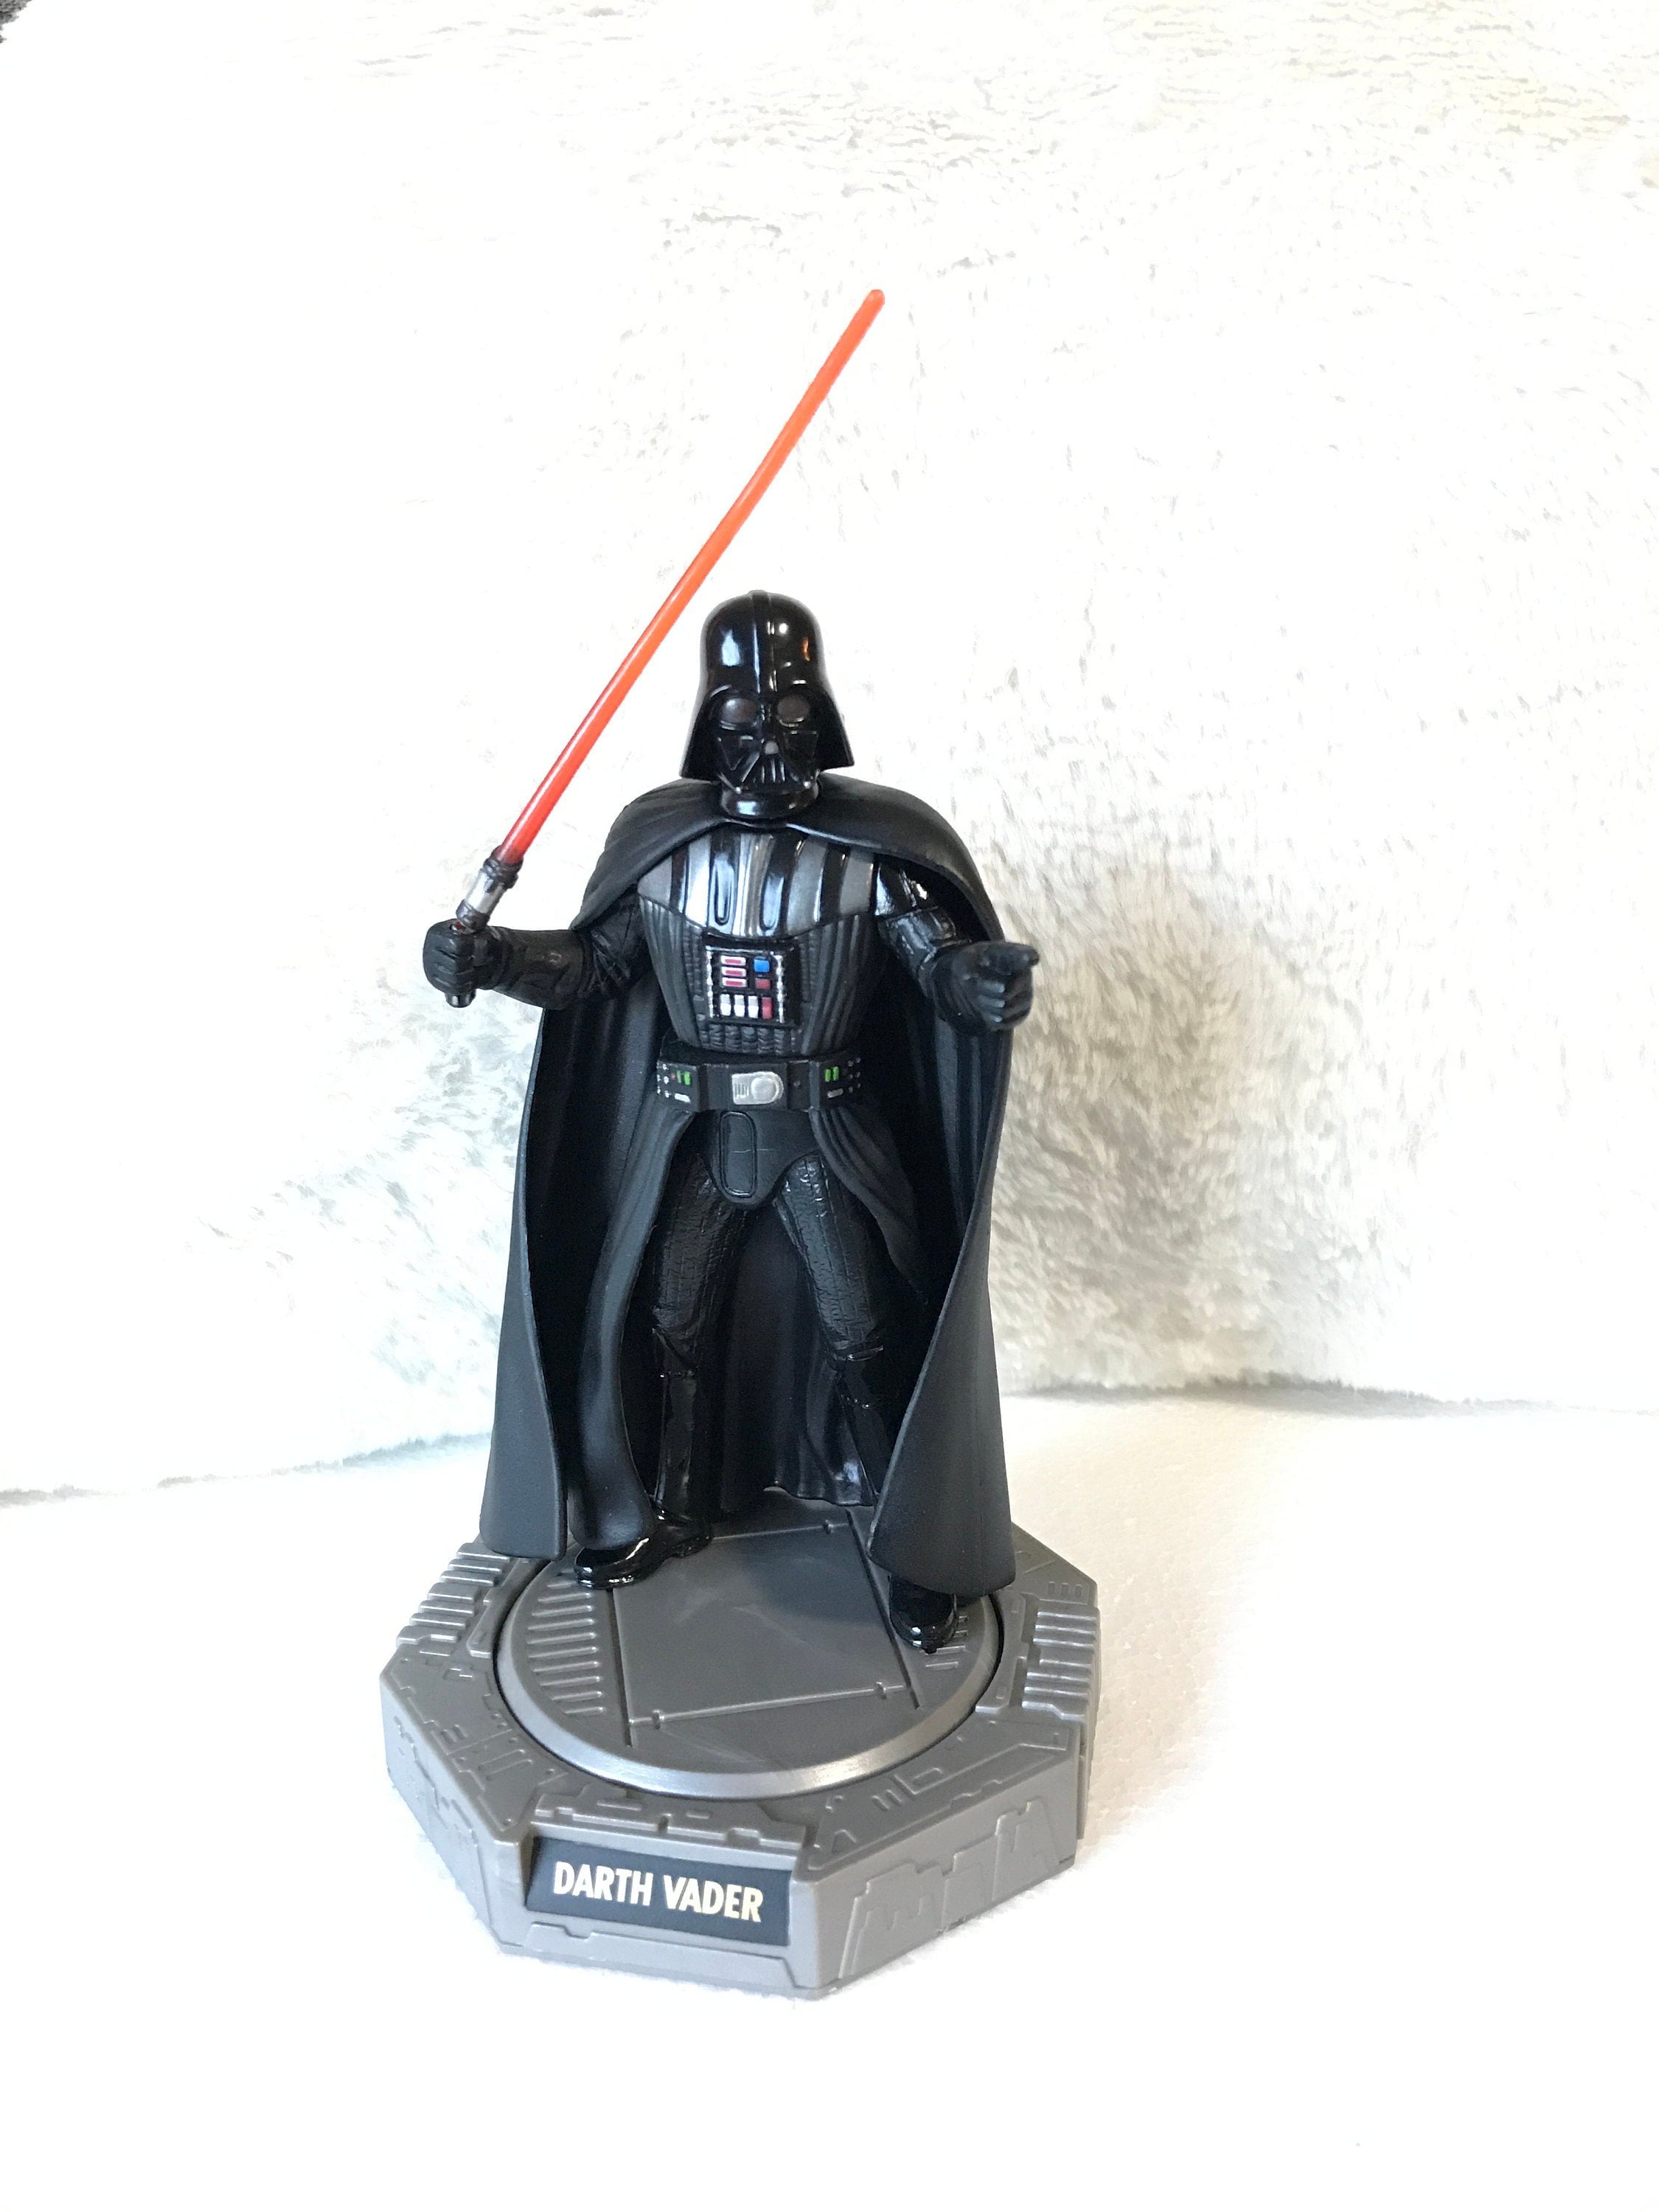 Star Wars Darth Vader Action Figure on Spinning Base 1998 Hasbro